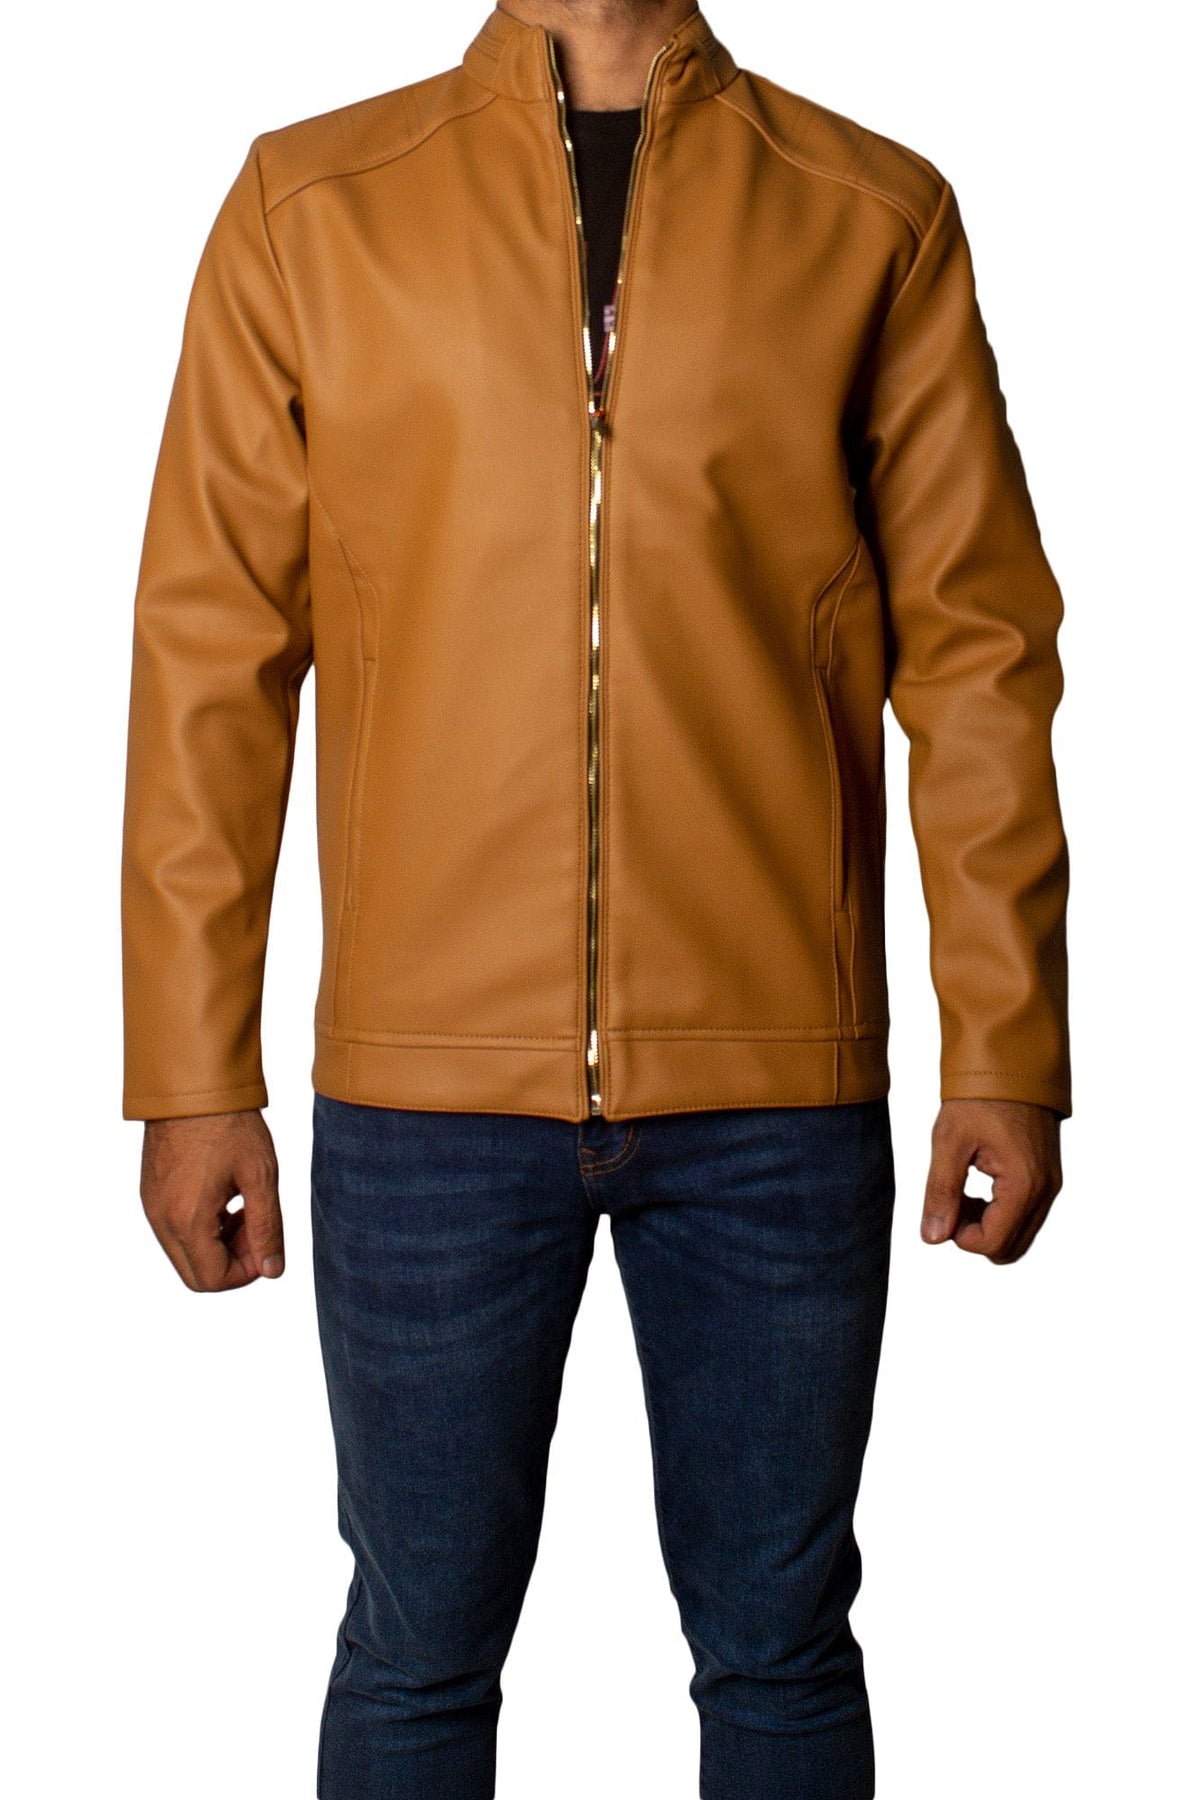 Men's Faux Leather Jacket Jk-0287 Brown